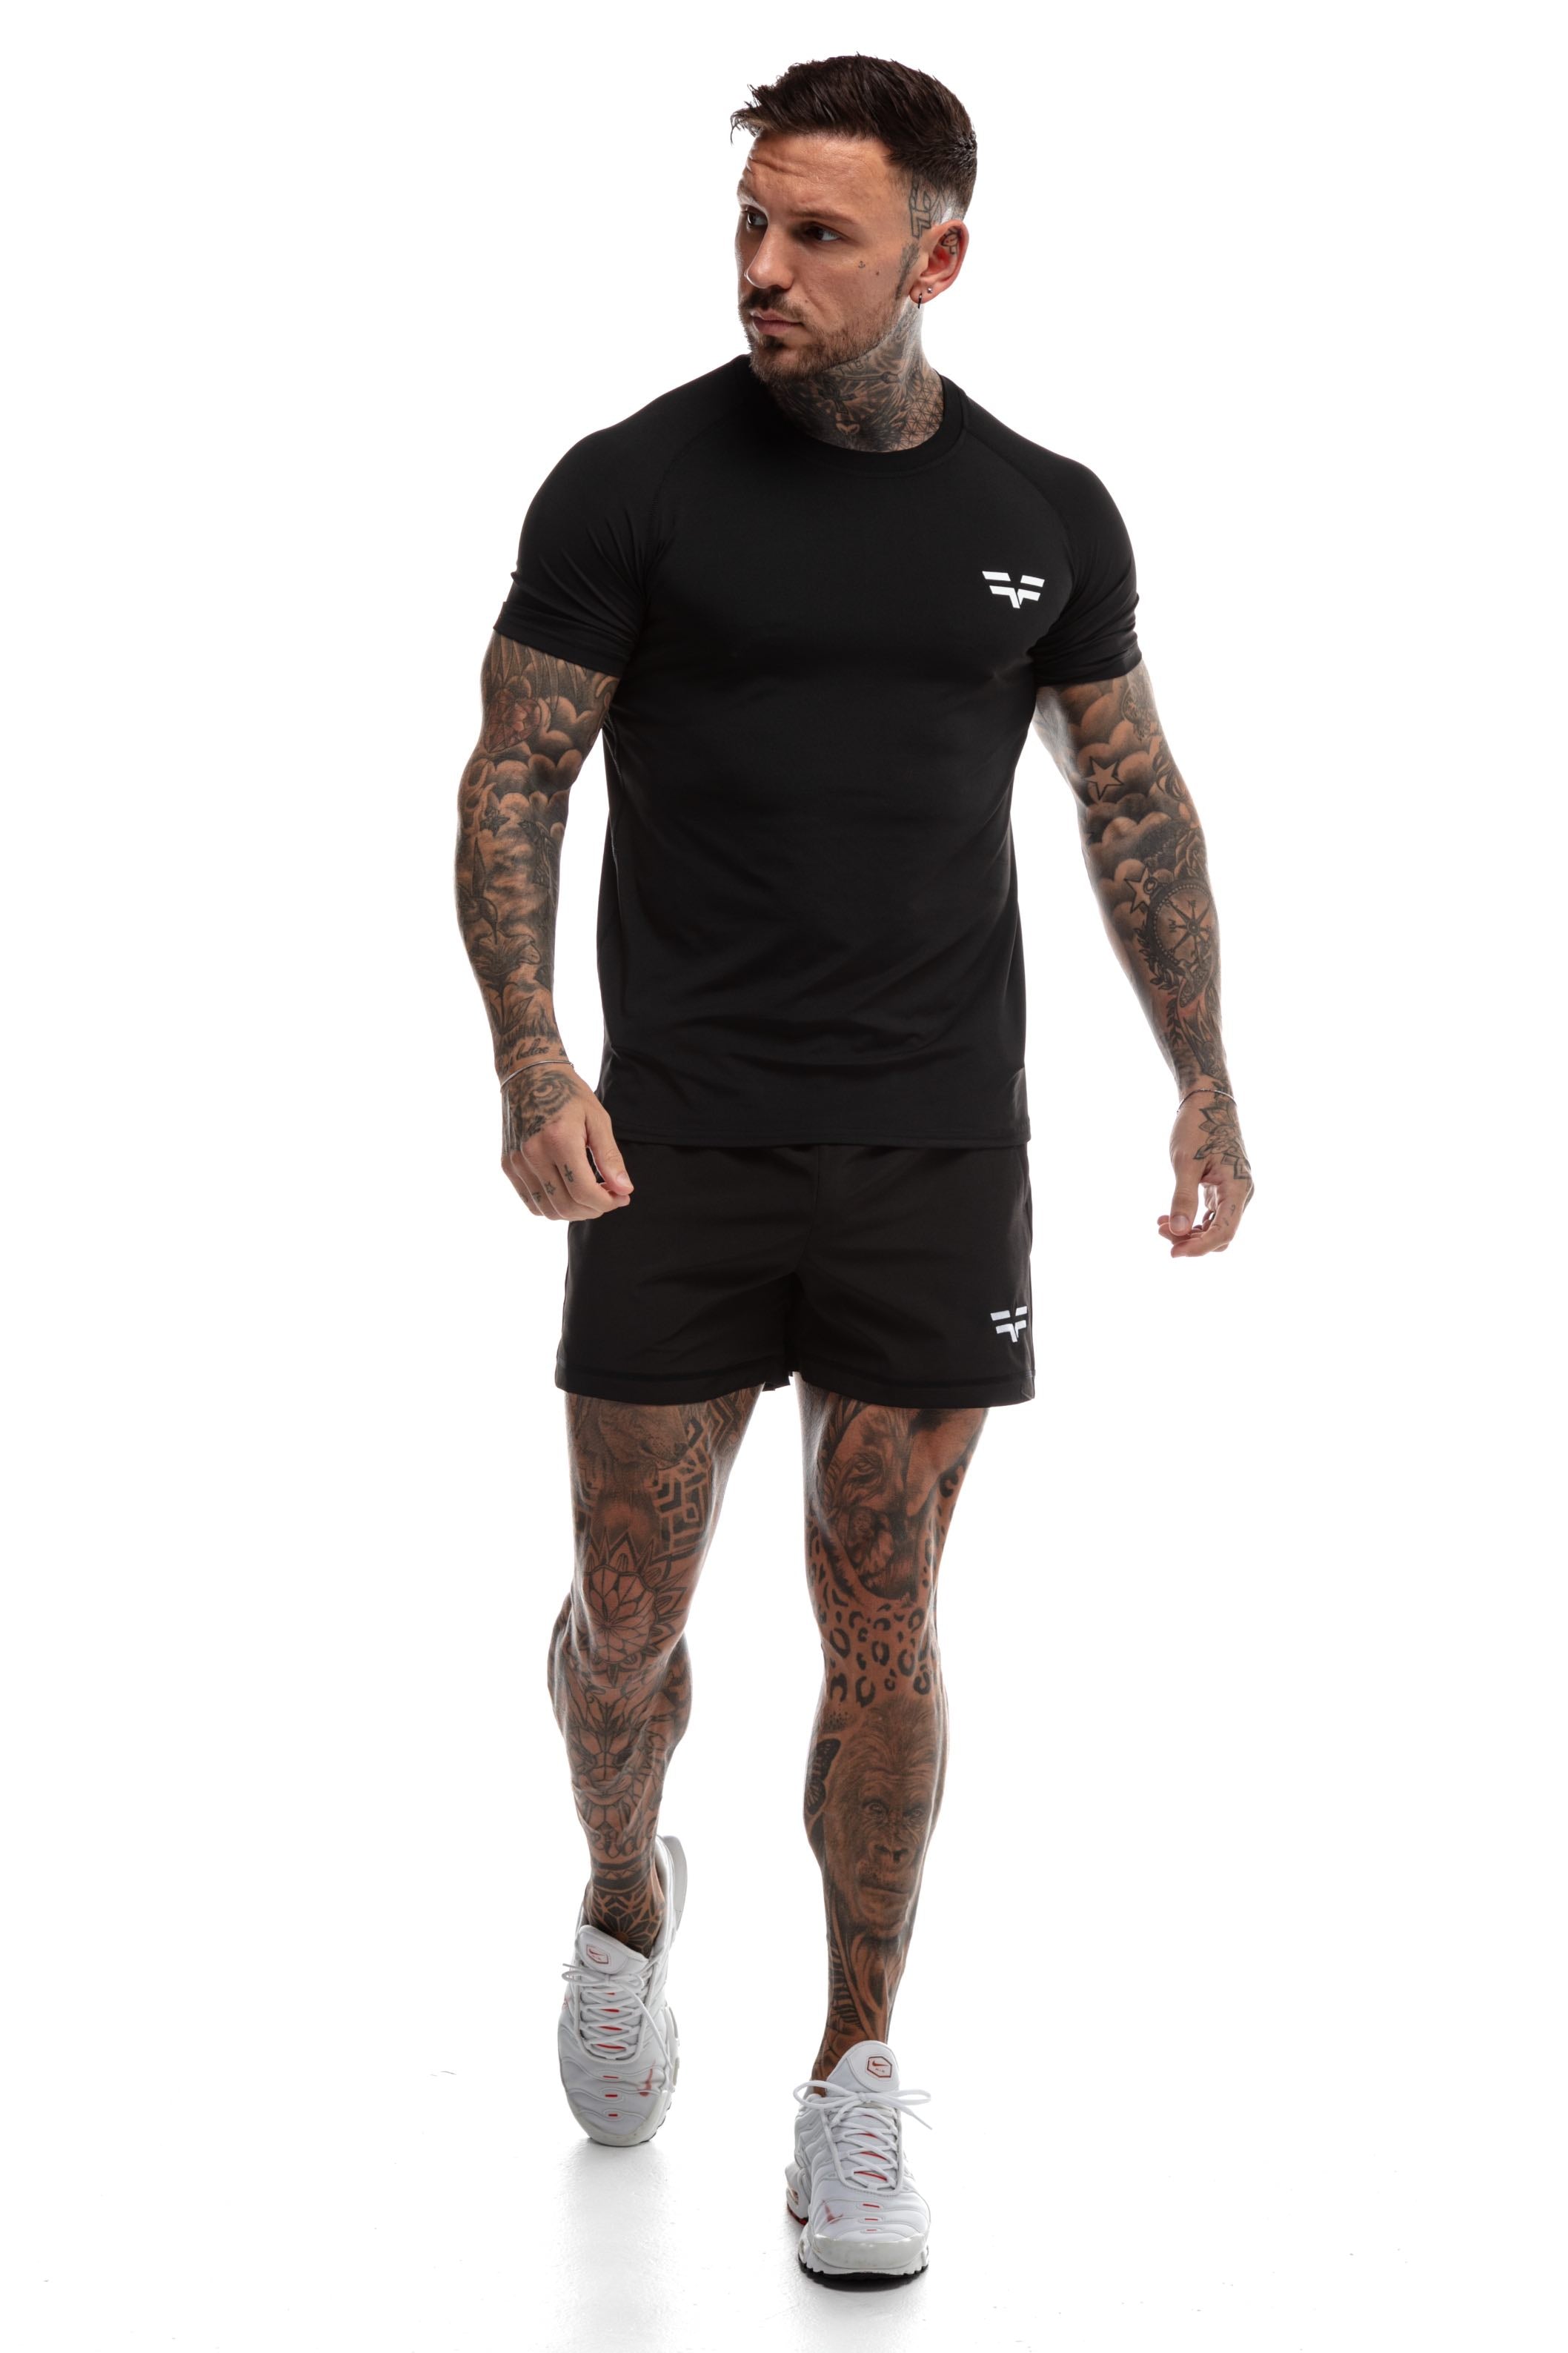 GymFreak Mens 365 Shorts - Black - 3.5inch